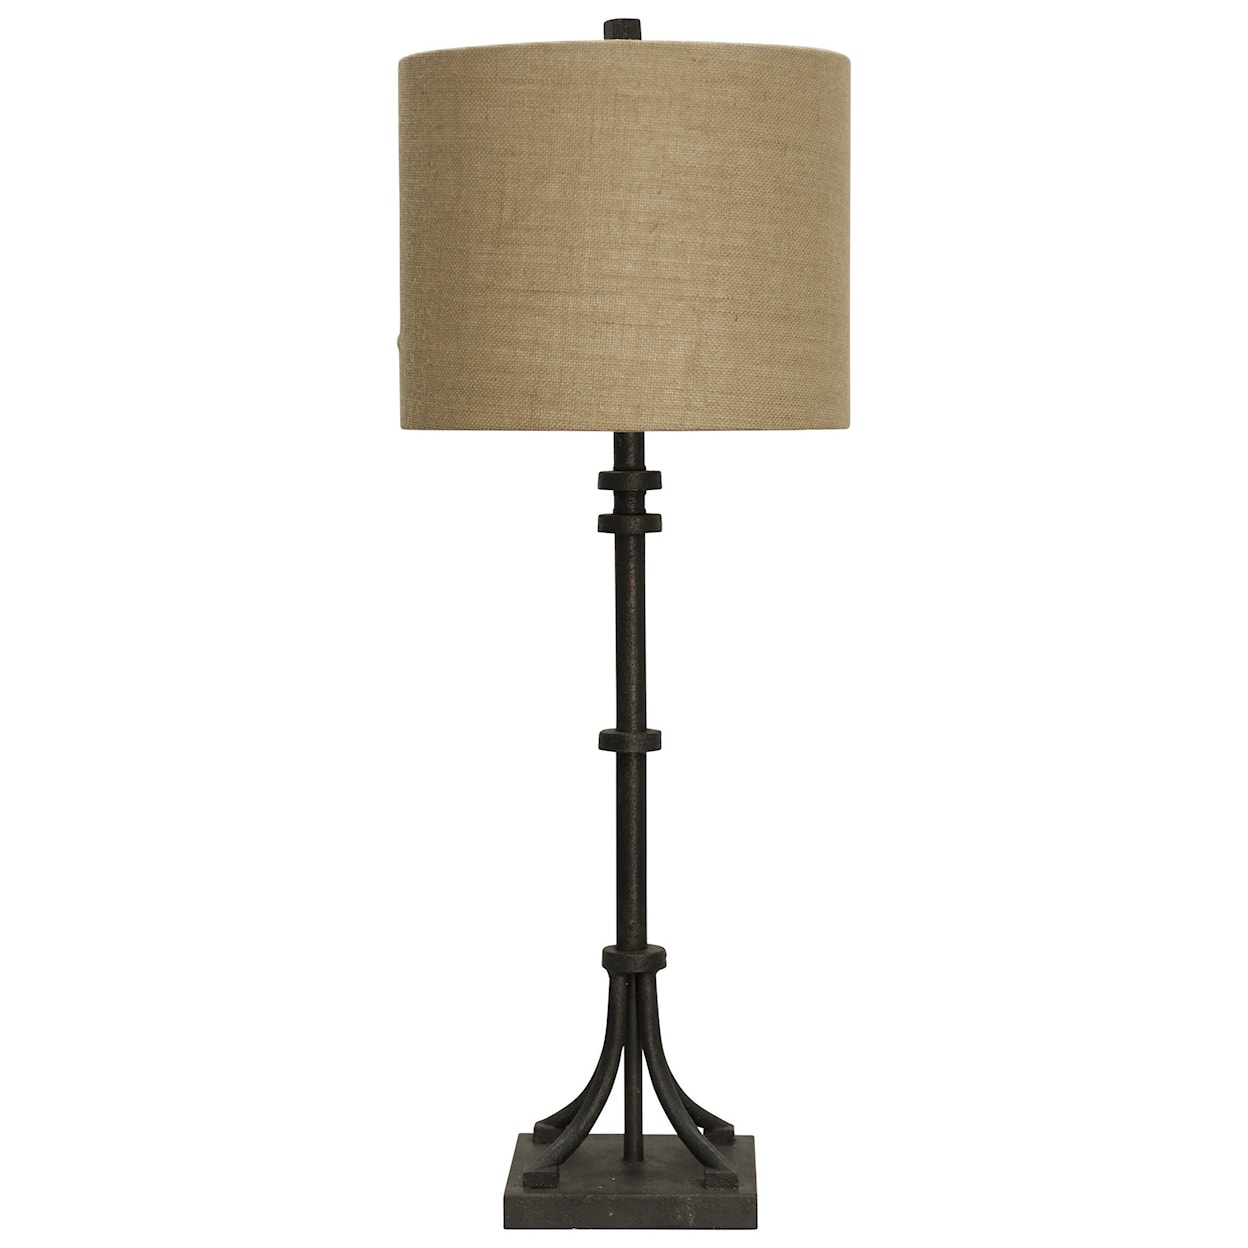 StyleCraft Lamps Table Lamp w/ Iron Base